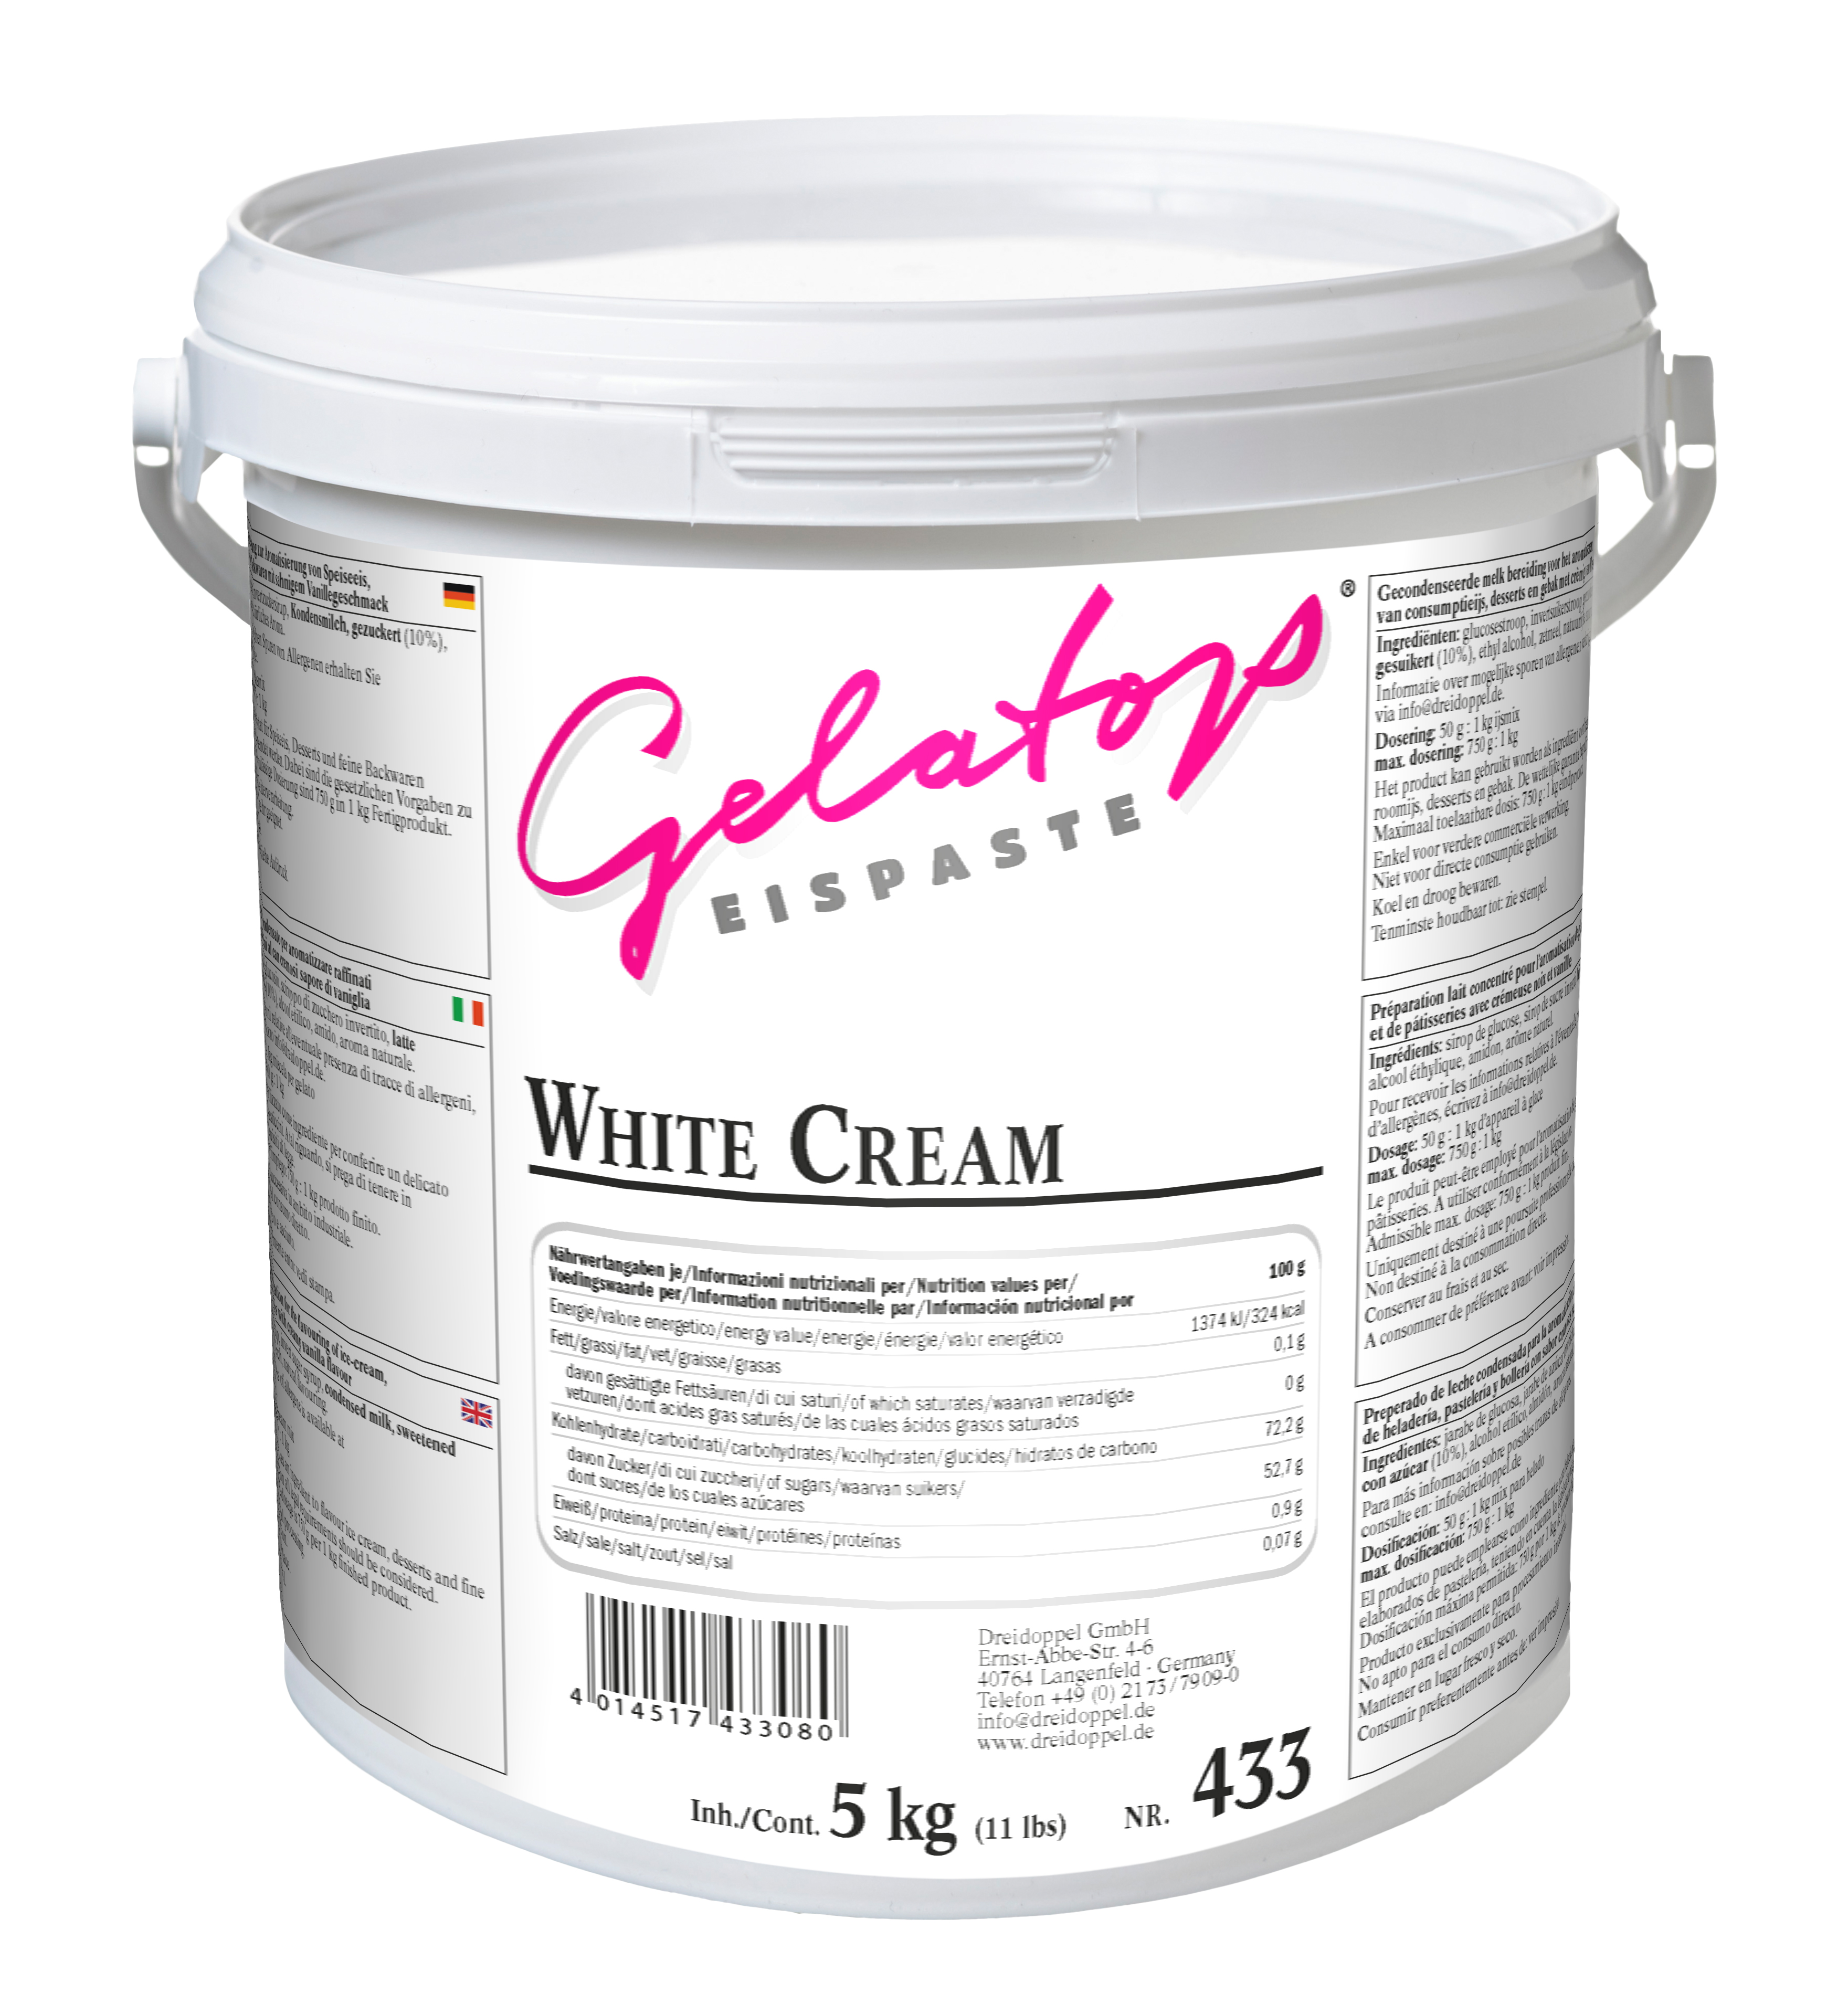 Dreidoppel Paste White Cream 5kg